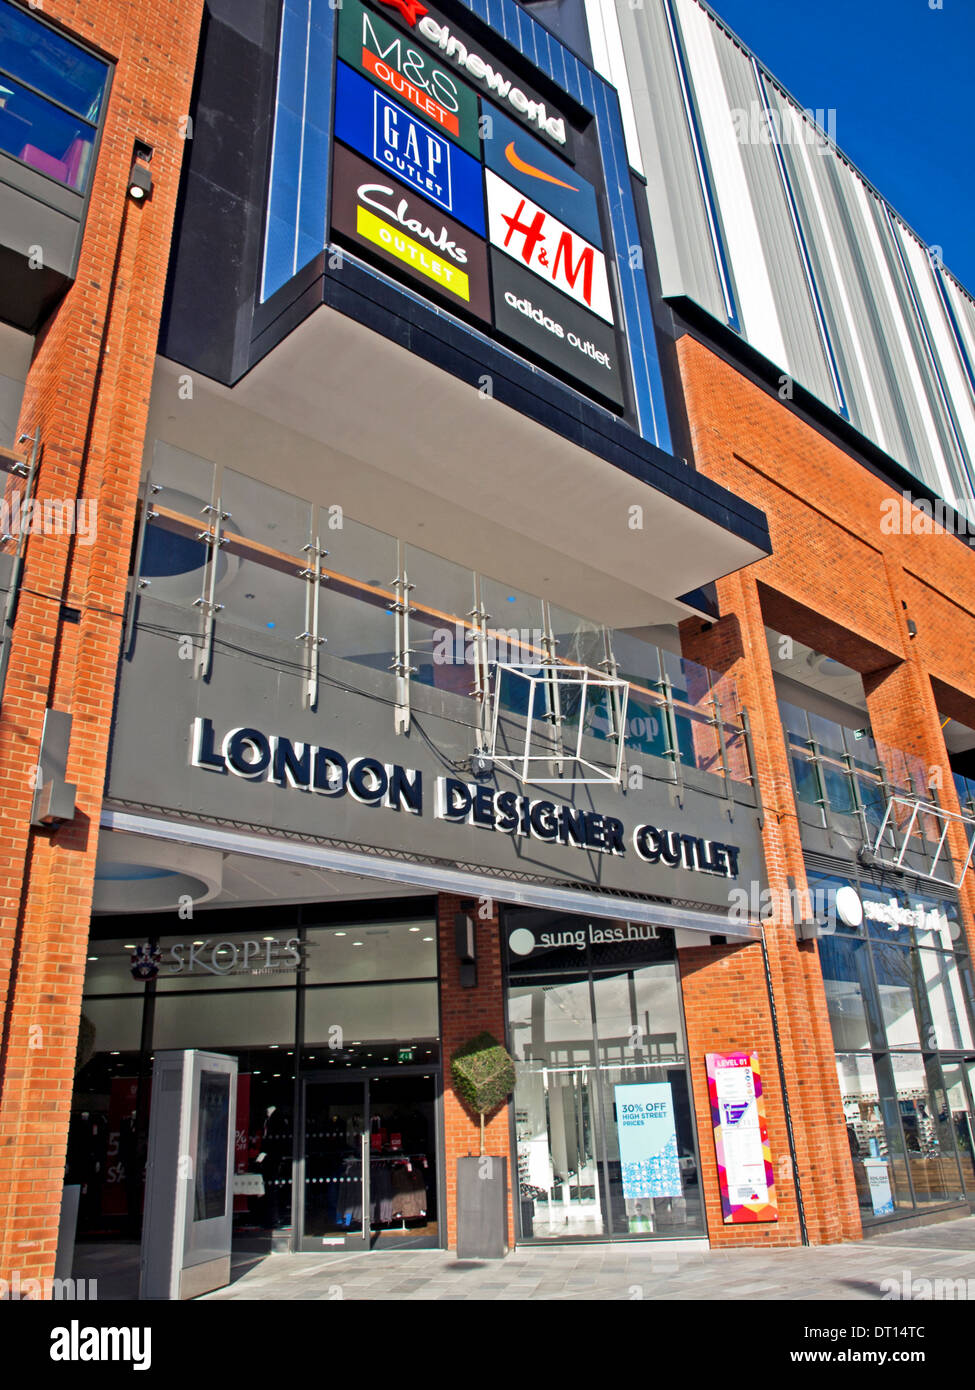 The London Designer Outlet, Wembley, London Borough of Brent, United Kingdom Stock Photo - Alamy